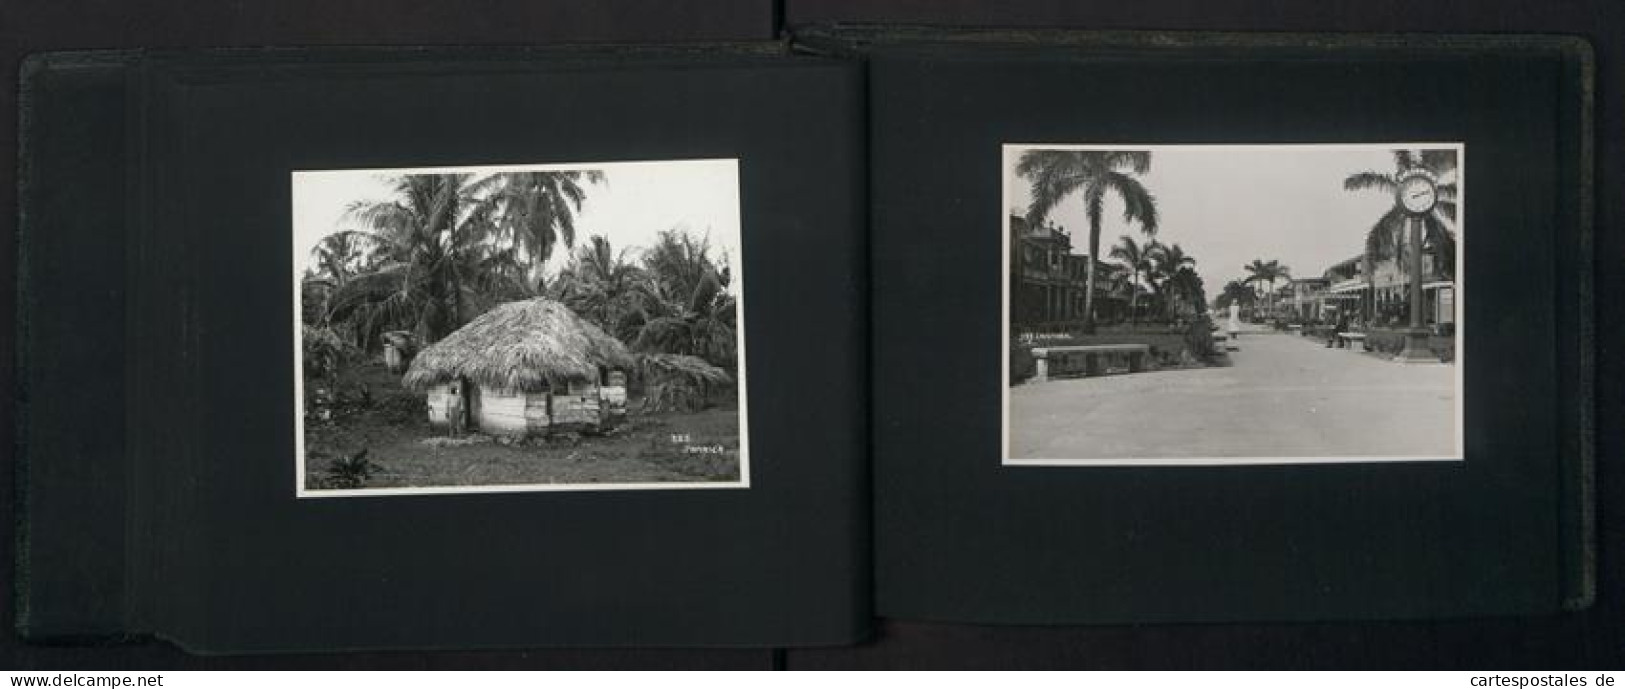 2 Fotoalben mit 99 Fotografien, Ansicht Panama, Karibikreise, Madeira, Antigua, Jamaica, Grenada, Barbados, Trinidad 